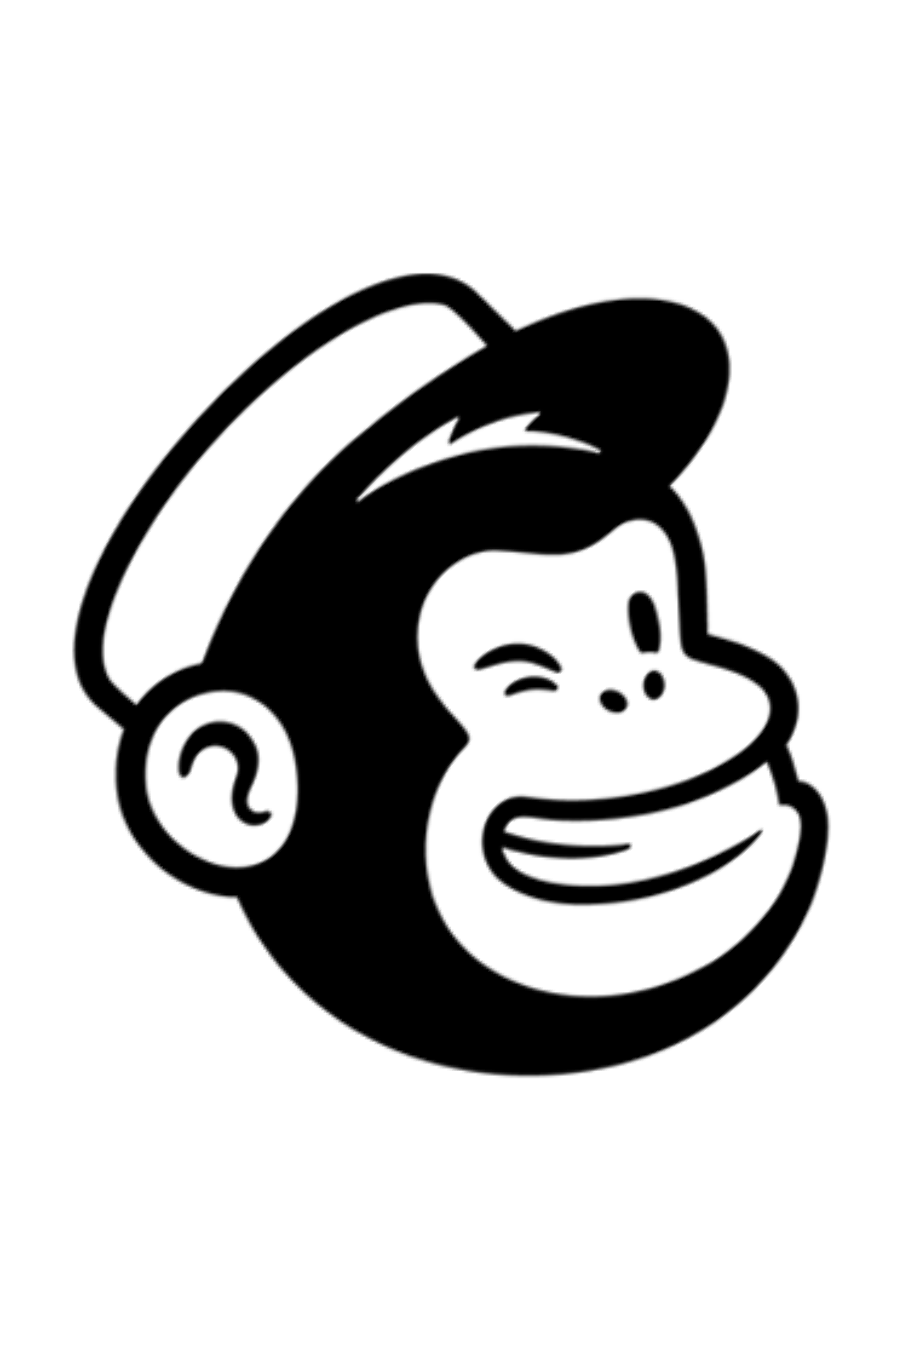 mailchimp logo black